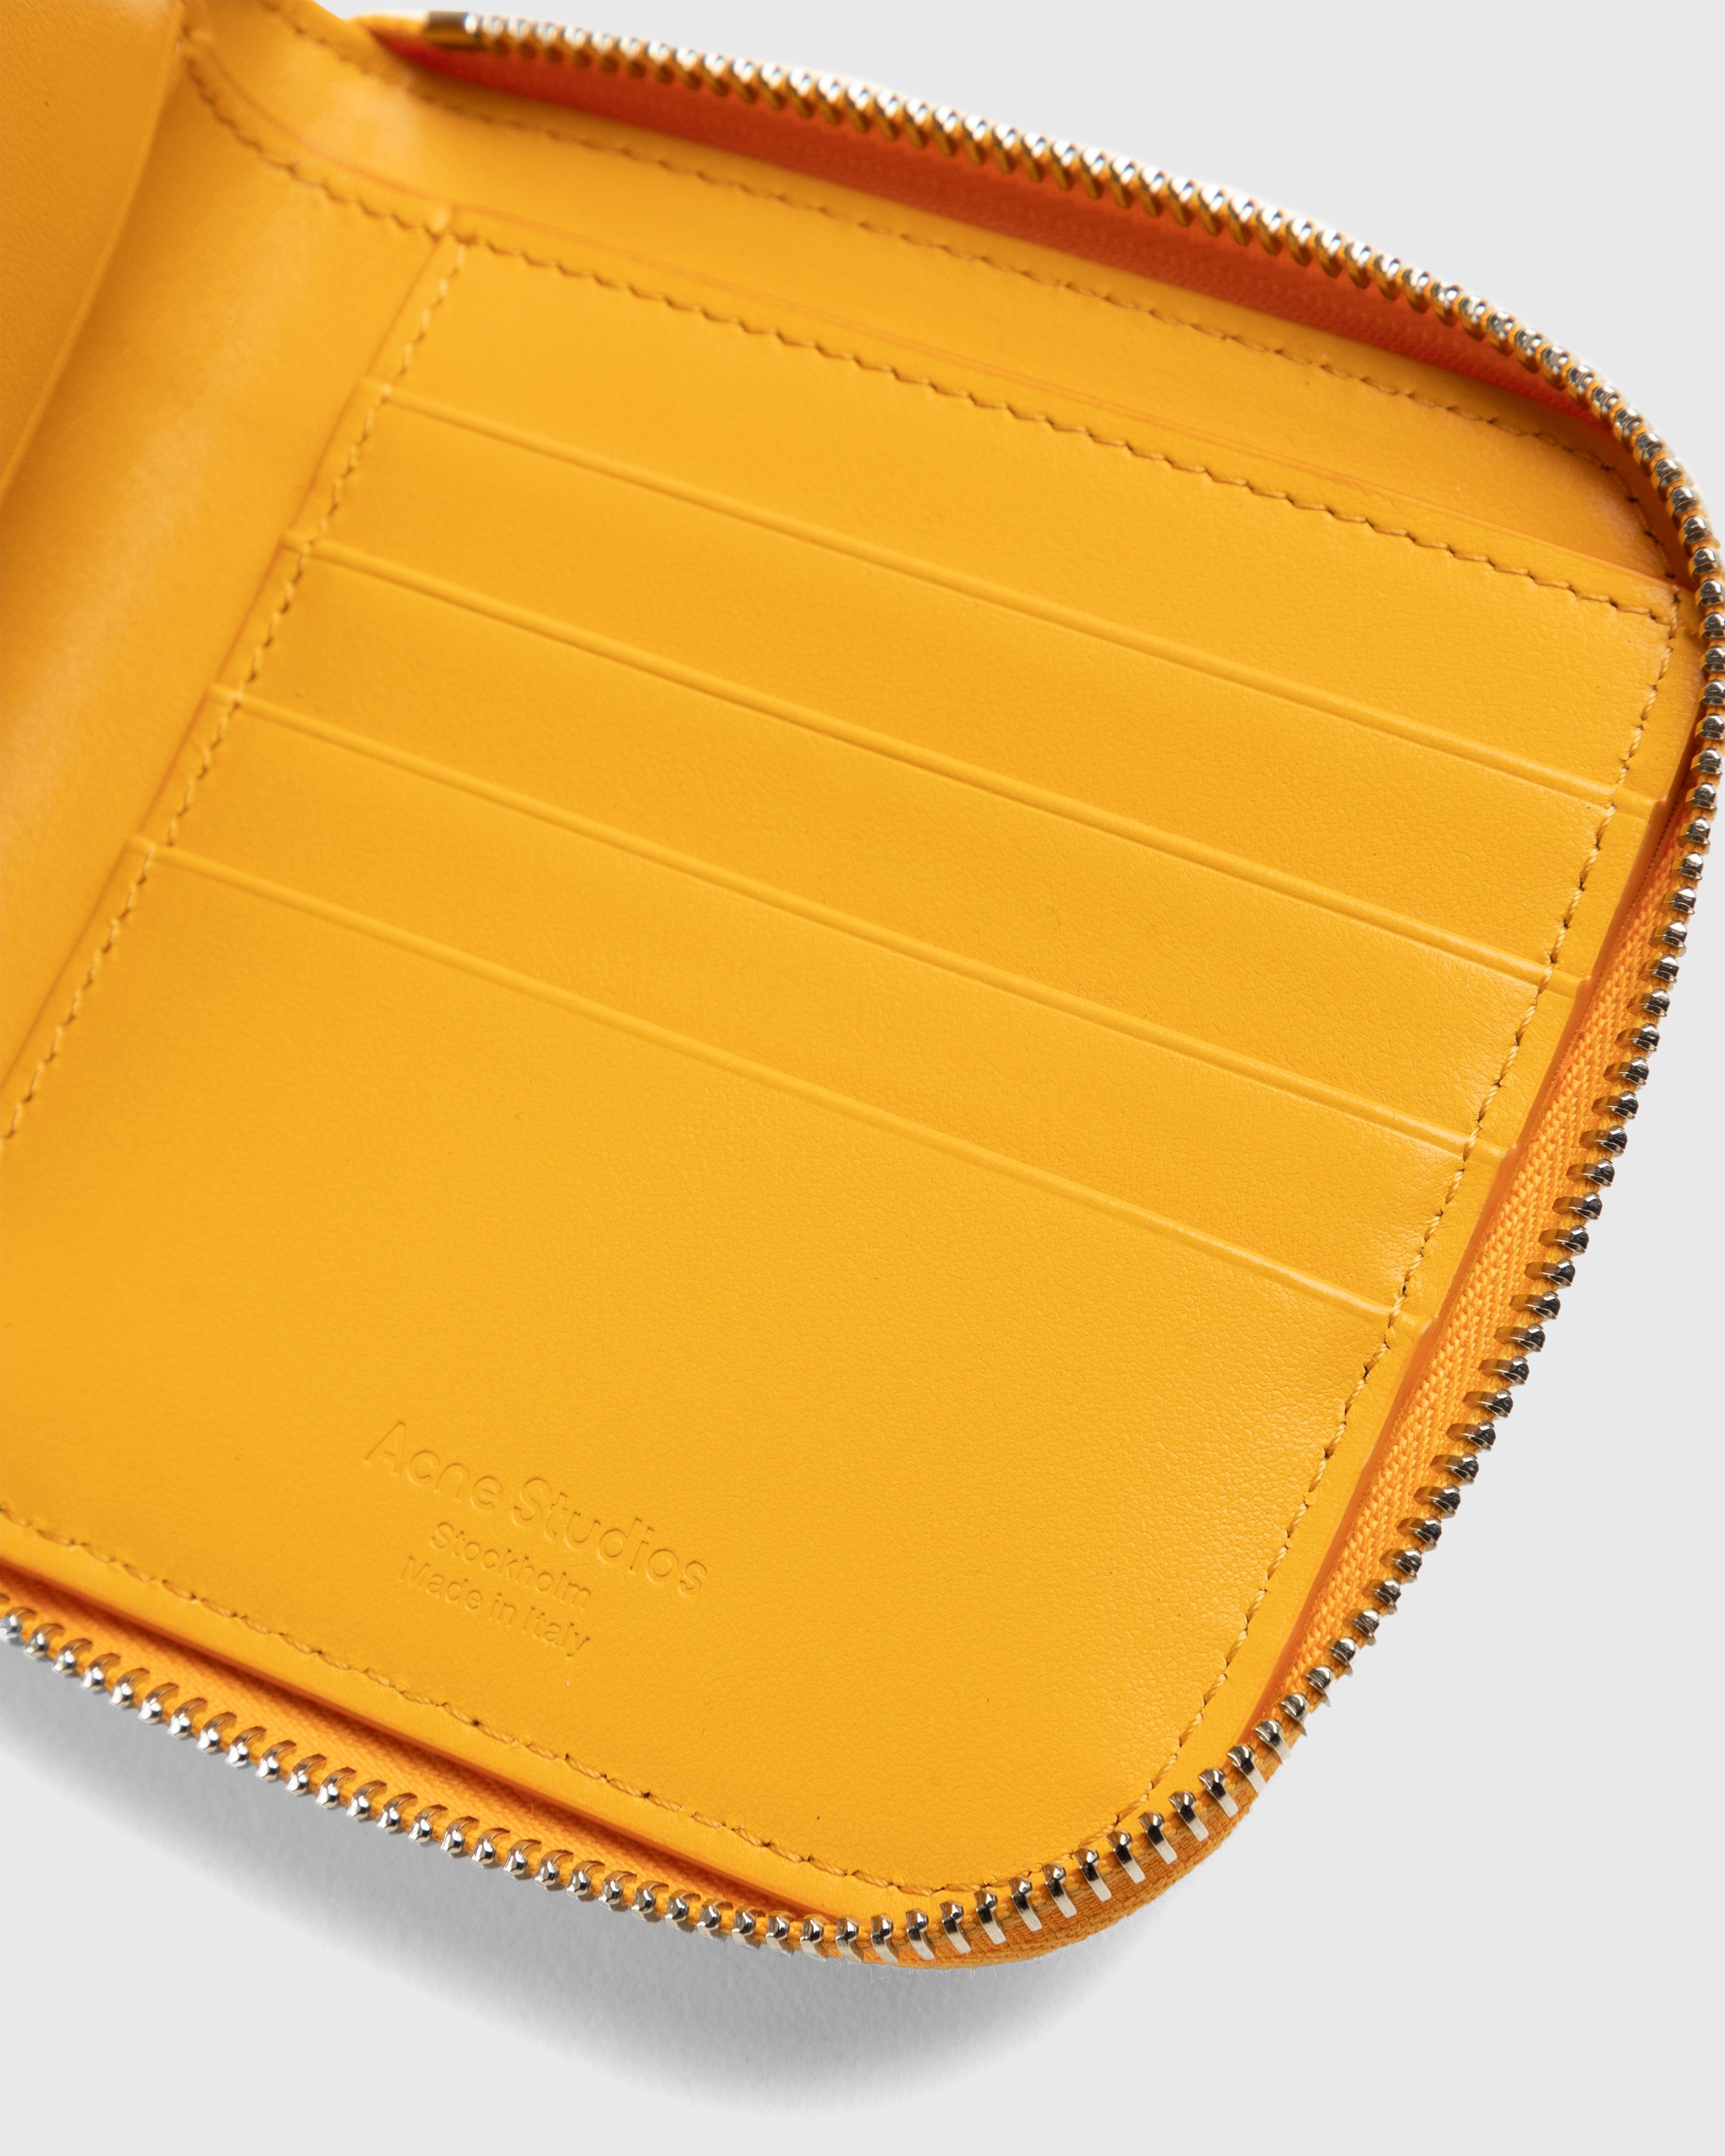 Acne Studios - Leather Zip Wallet Orange - Accessories - Orange - Image 5